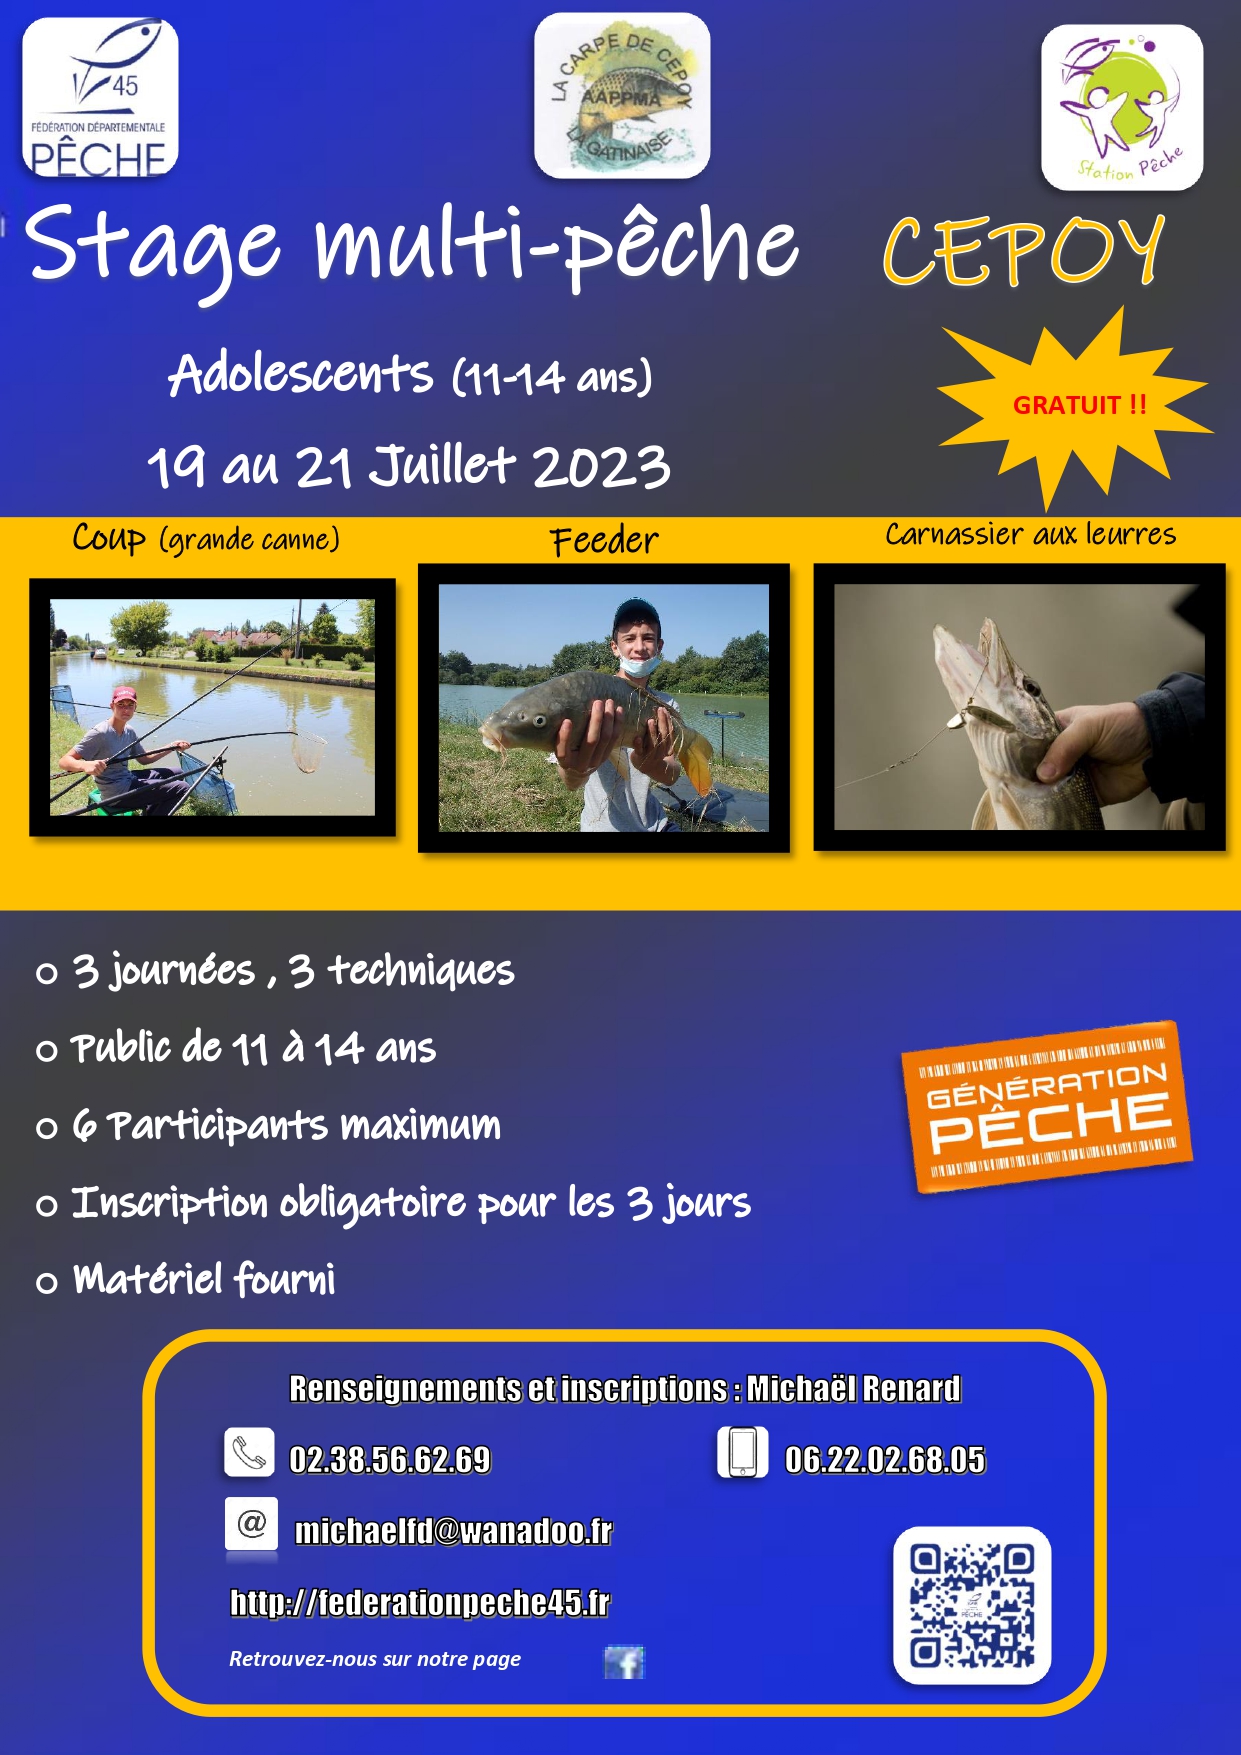 Stage multi pêche Cepoy 19 au 21 juillet